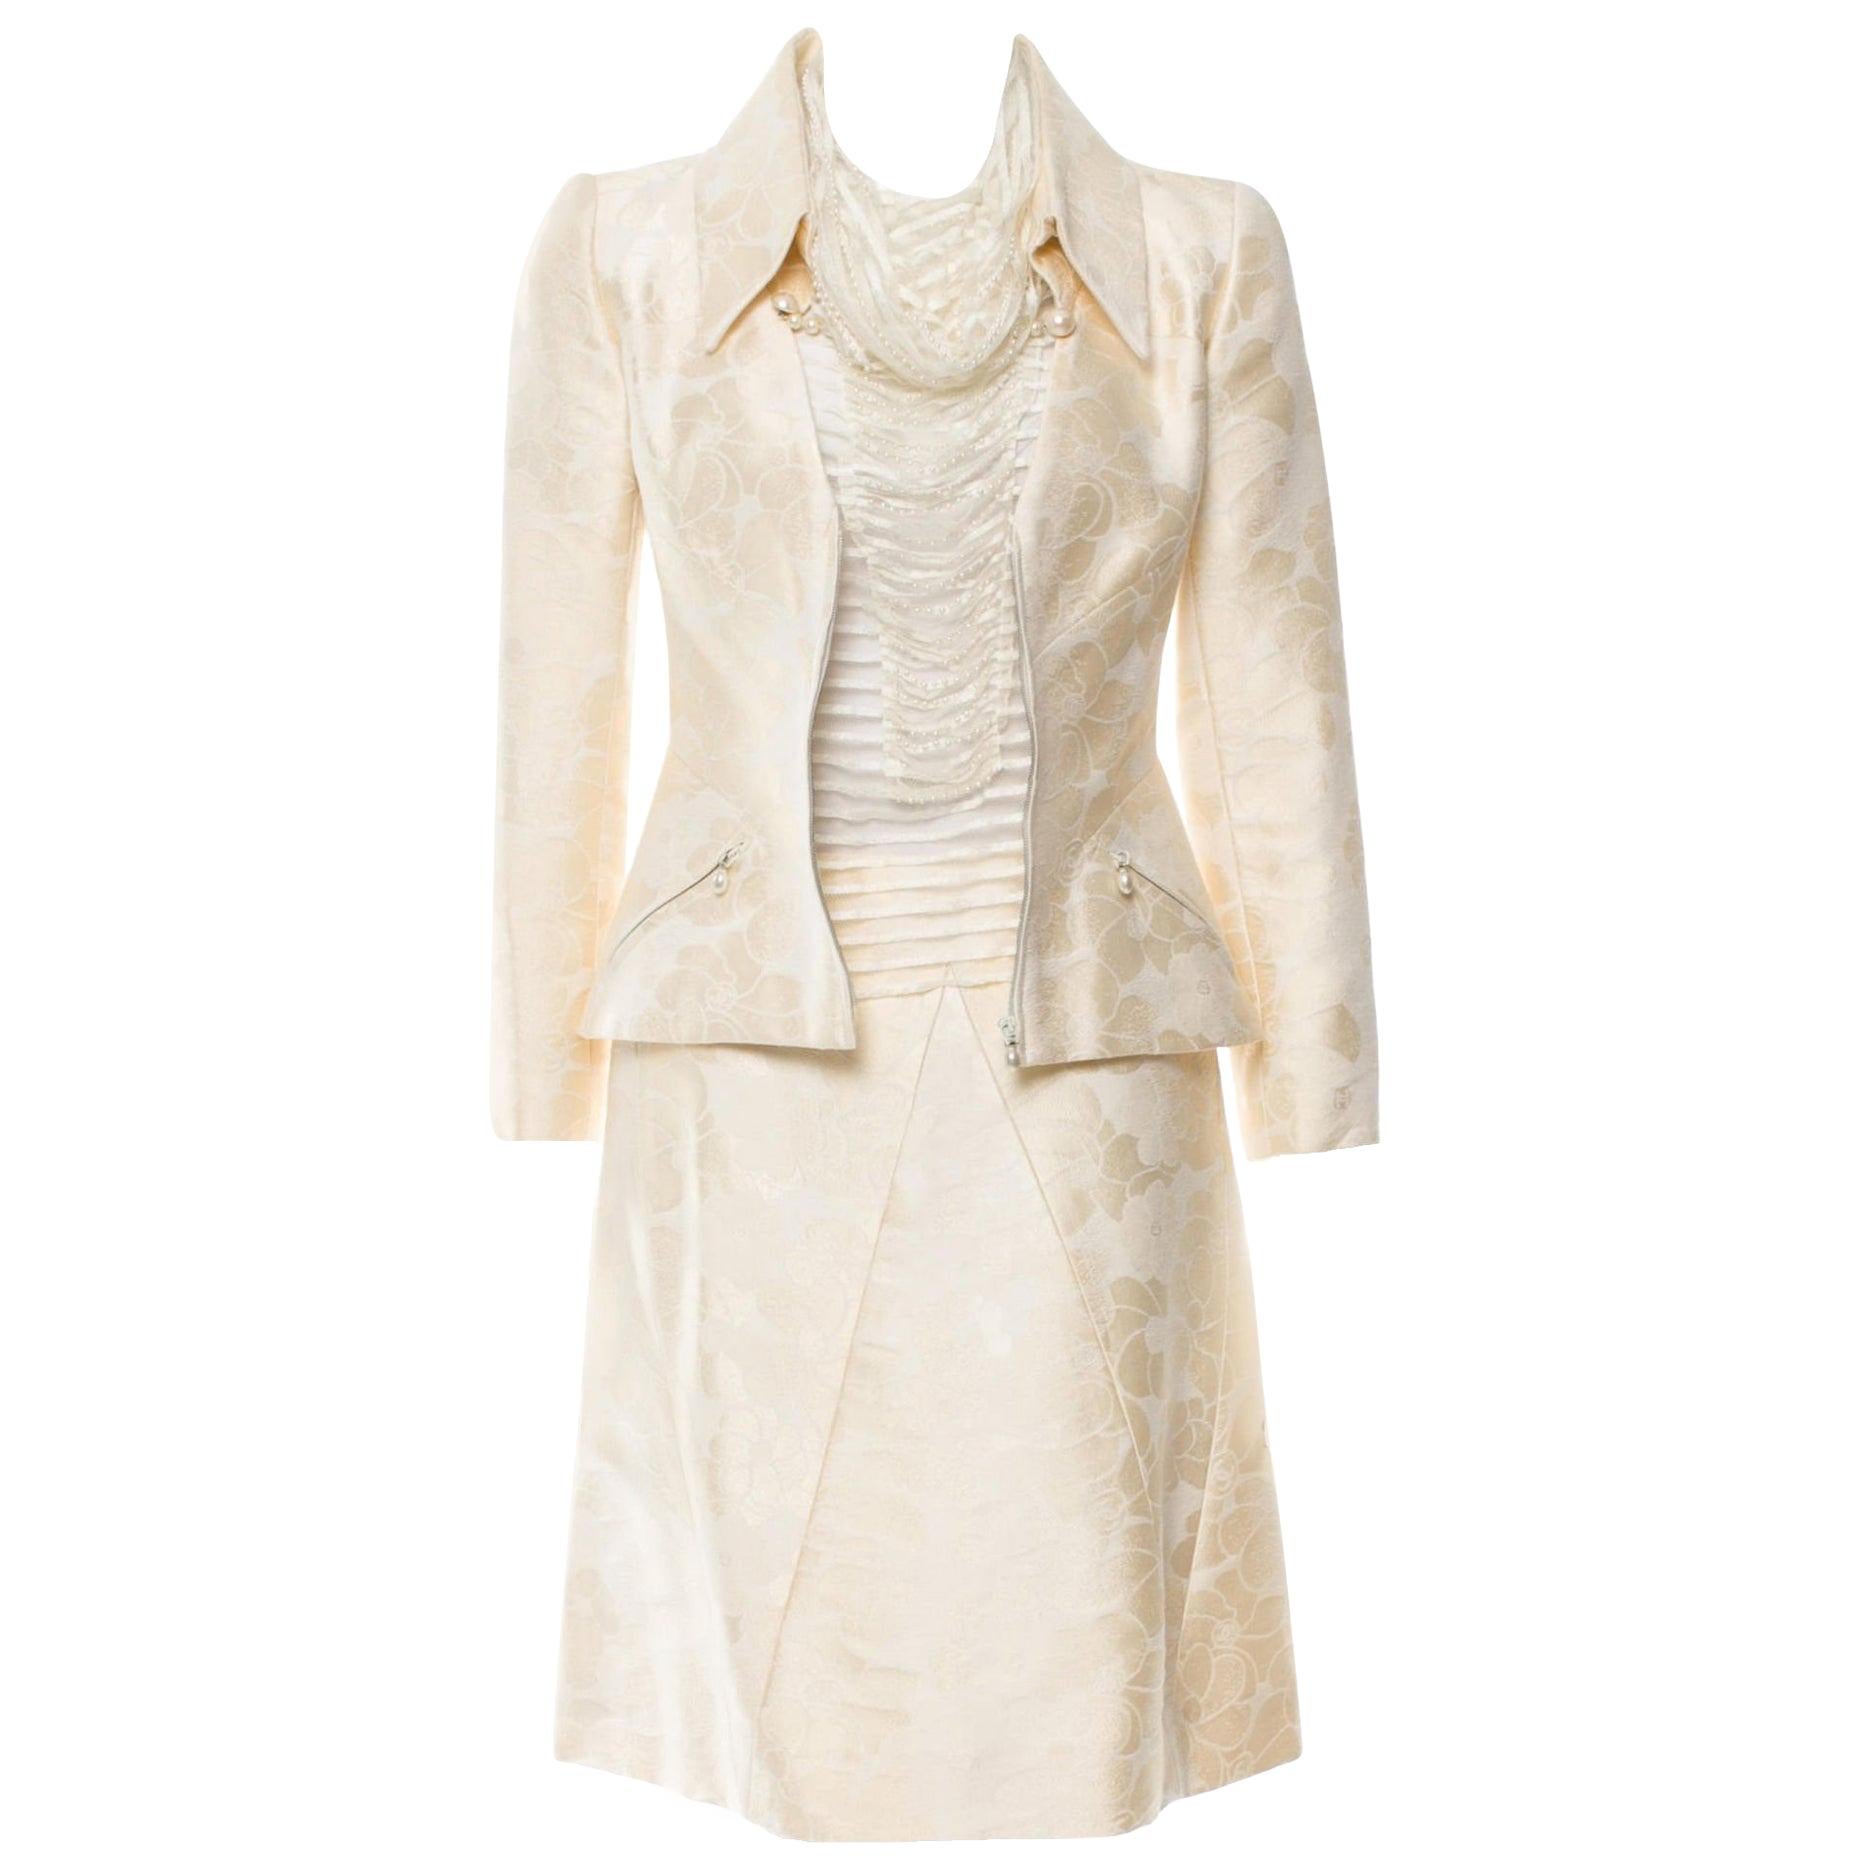 UNWORN Chanel Ivory Camellia Jacquard Pearl Jacket Blouse Skirt Suit Ensemble 34